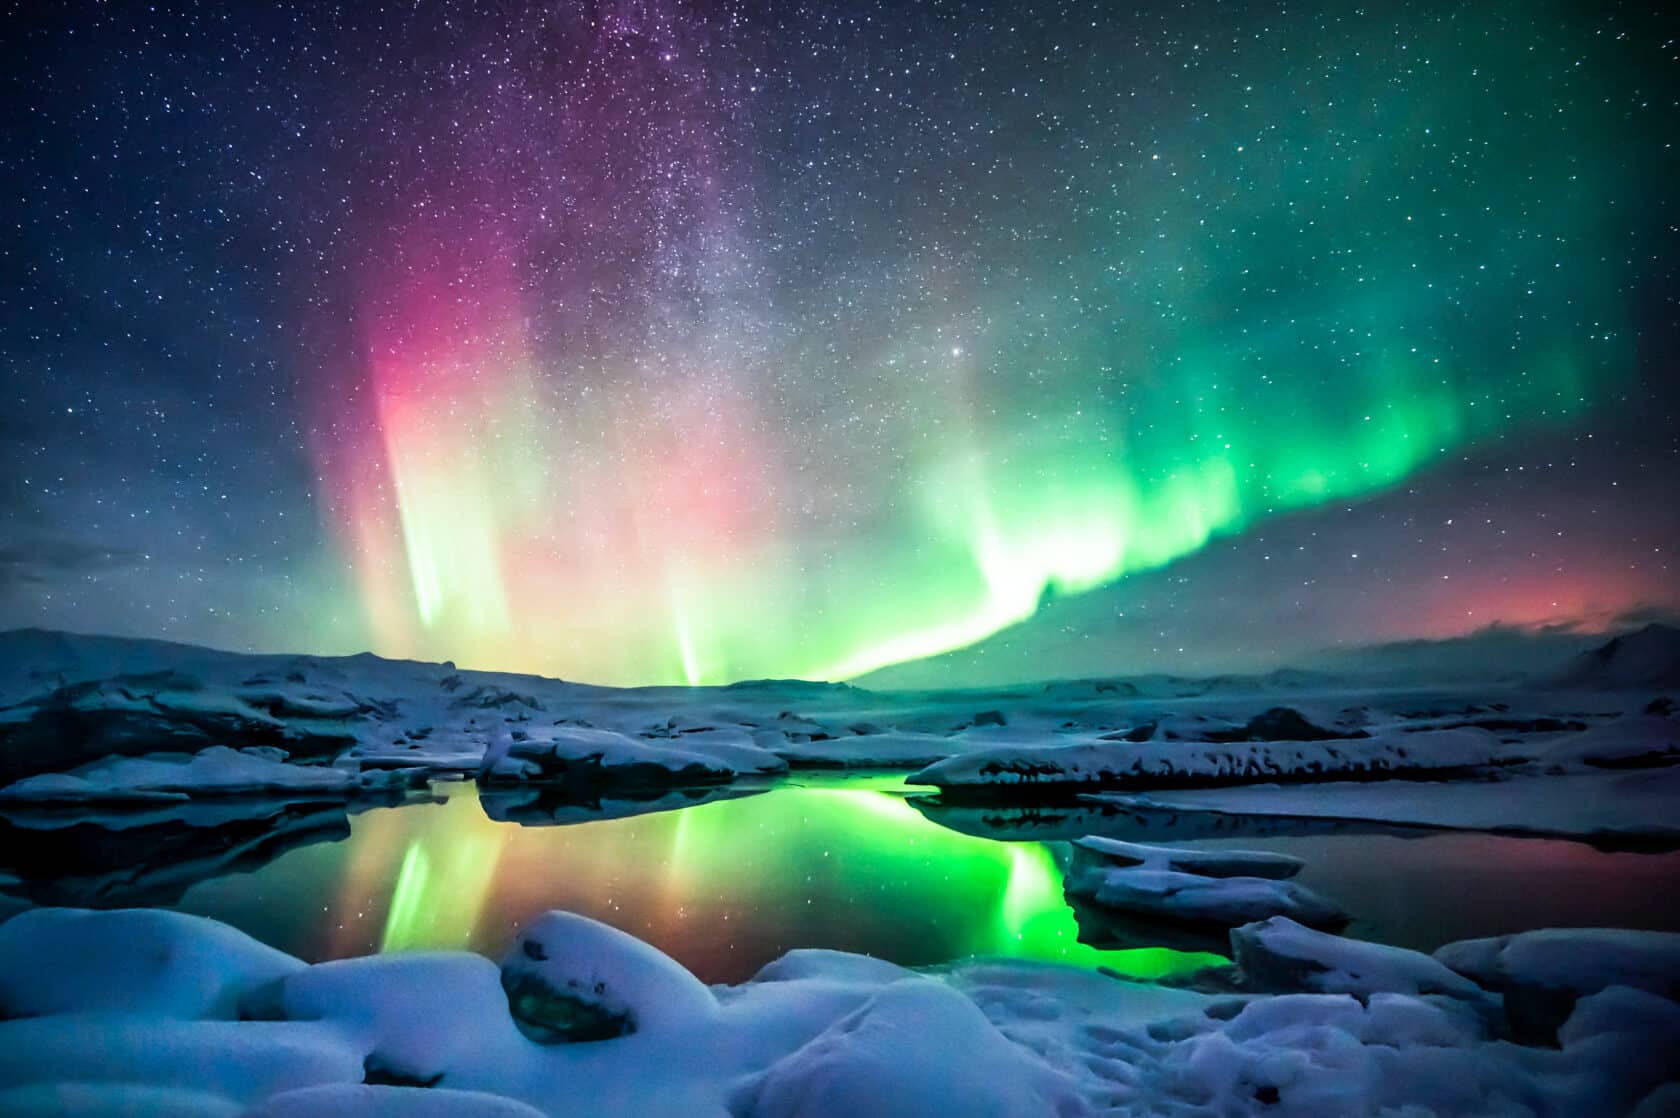 Mixed aurora dancing over the Jokulsarlon lagoon, Iceland